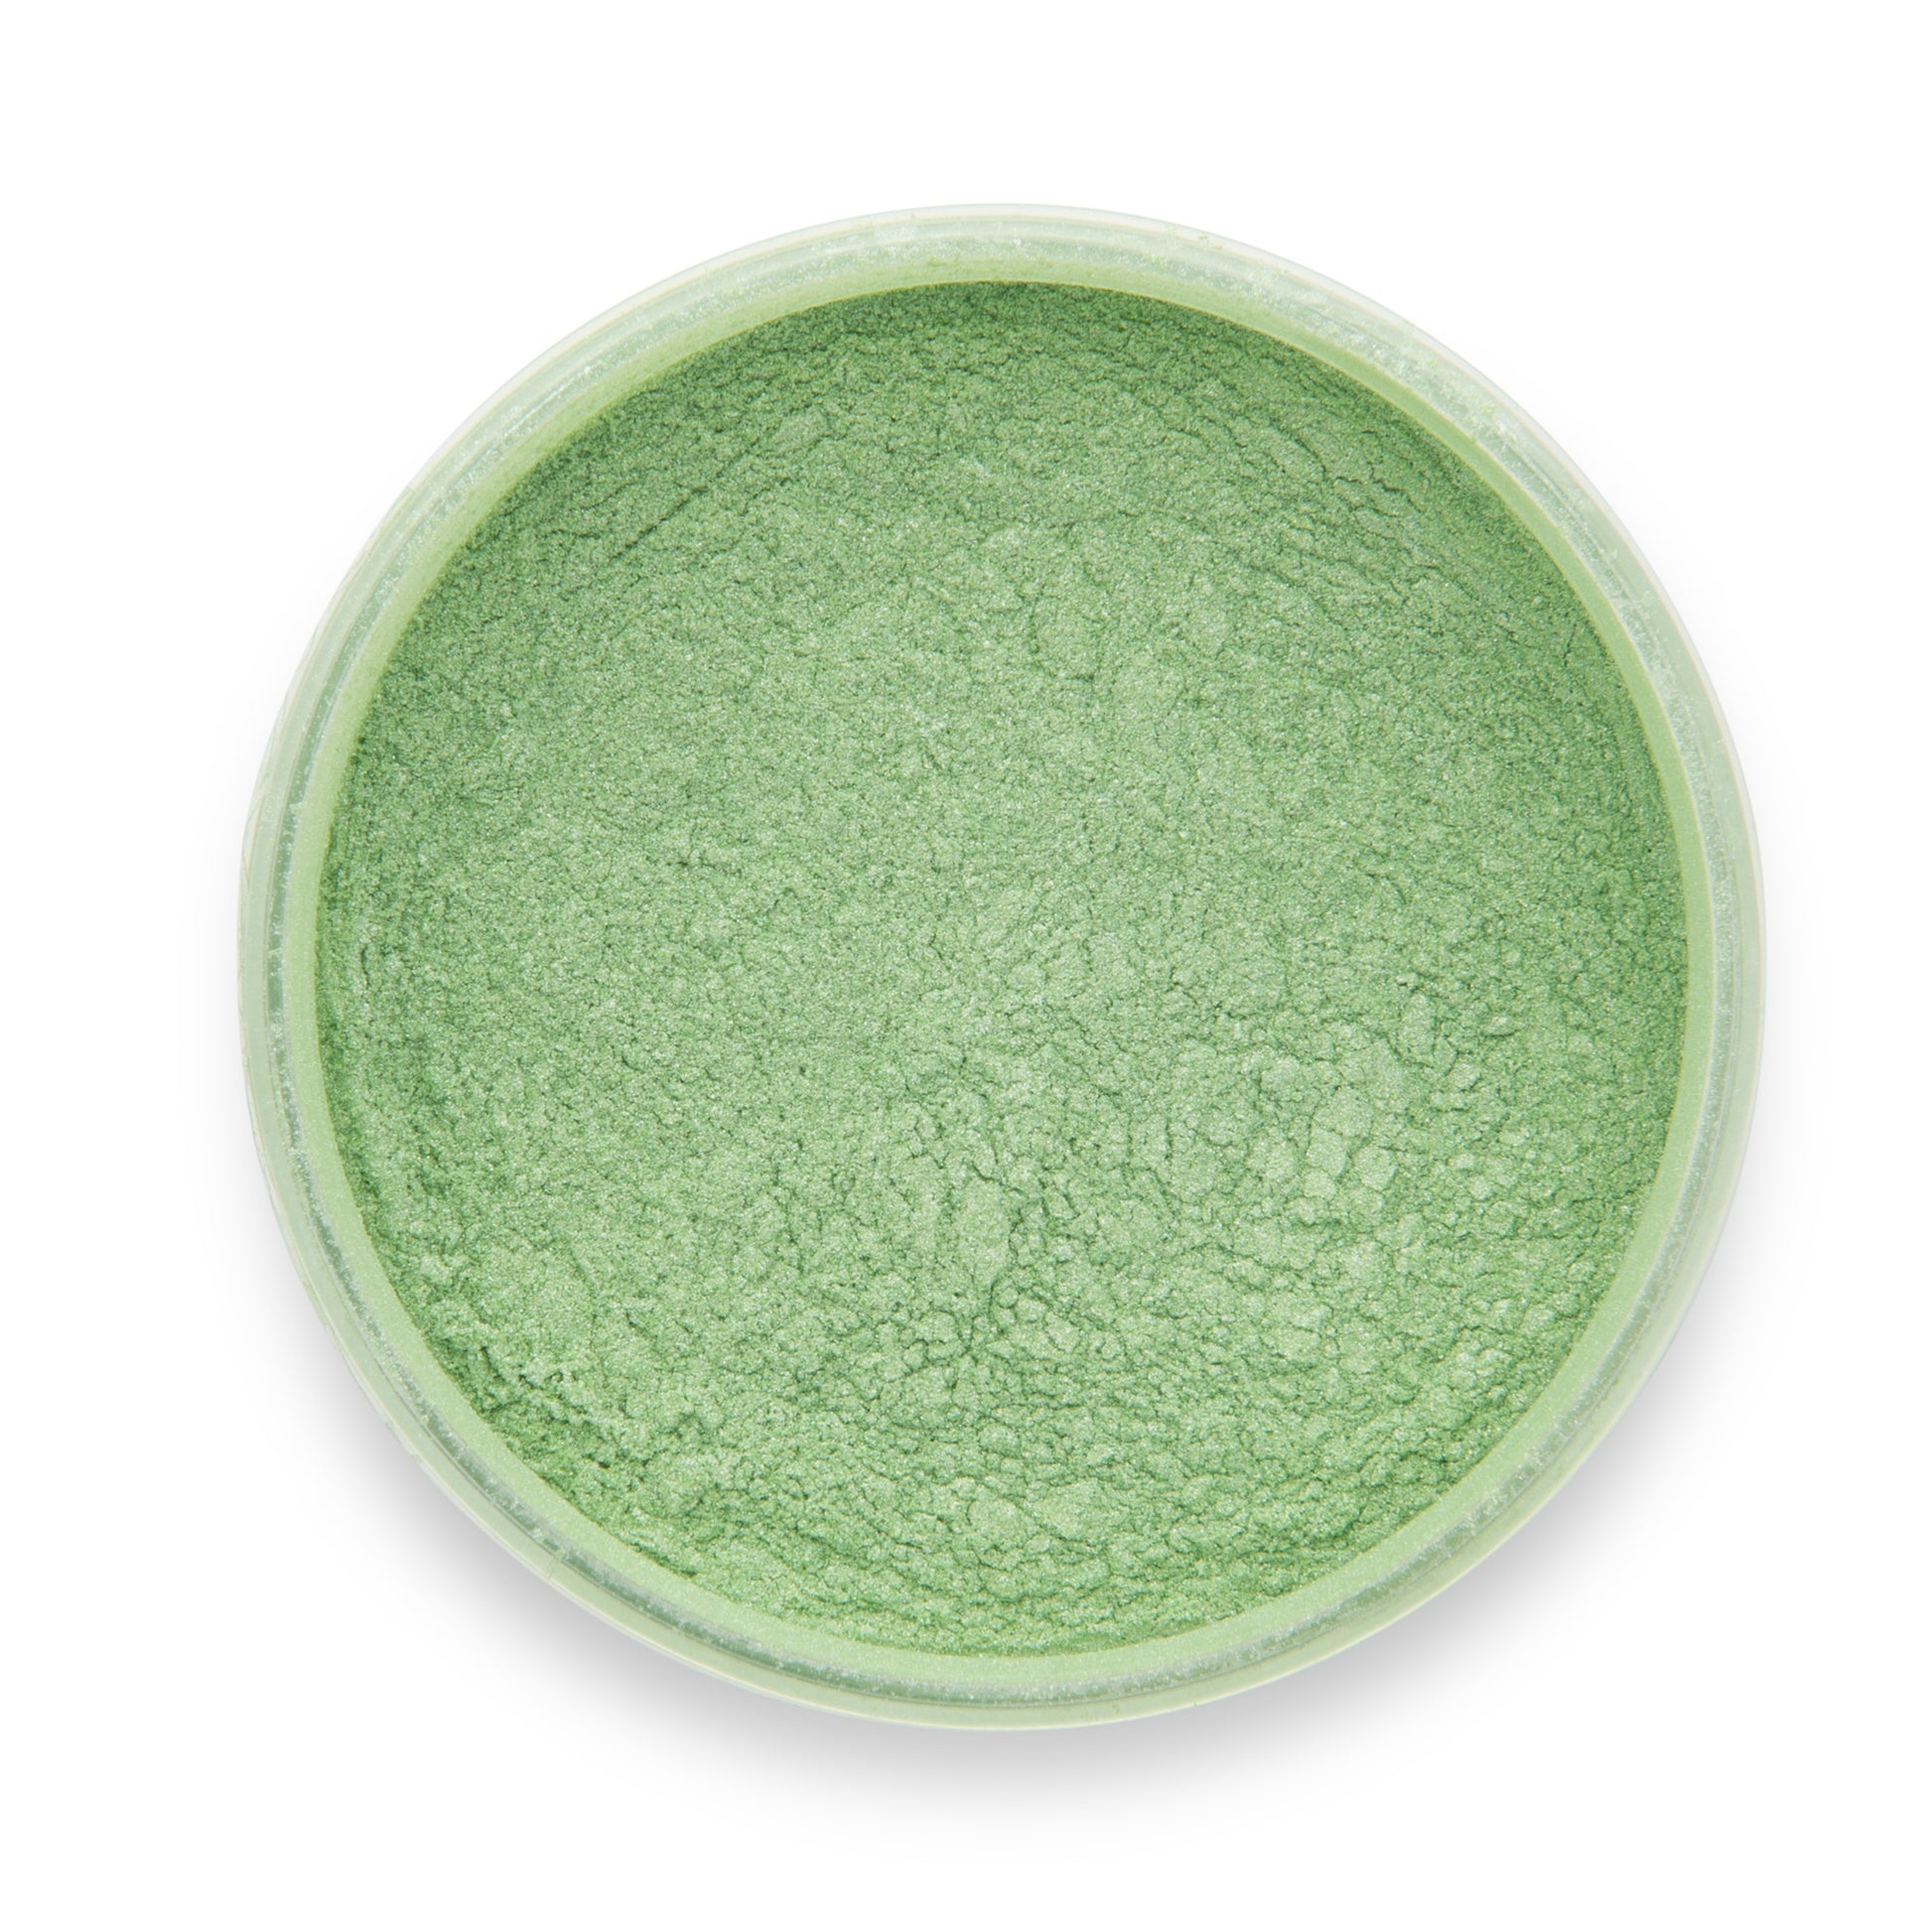 Pigmently Pistachio Green Pigment Powder